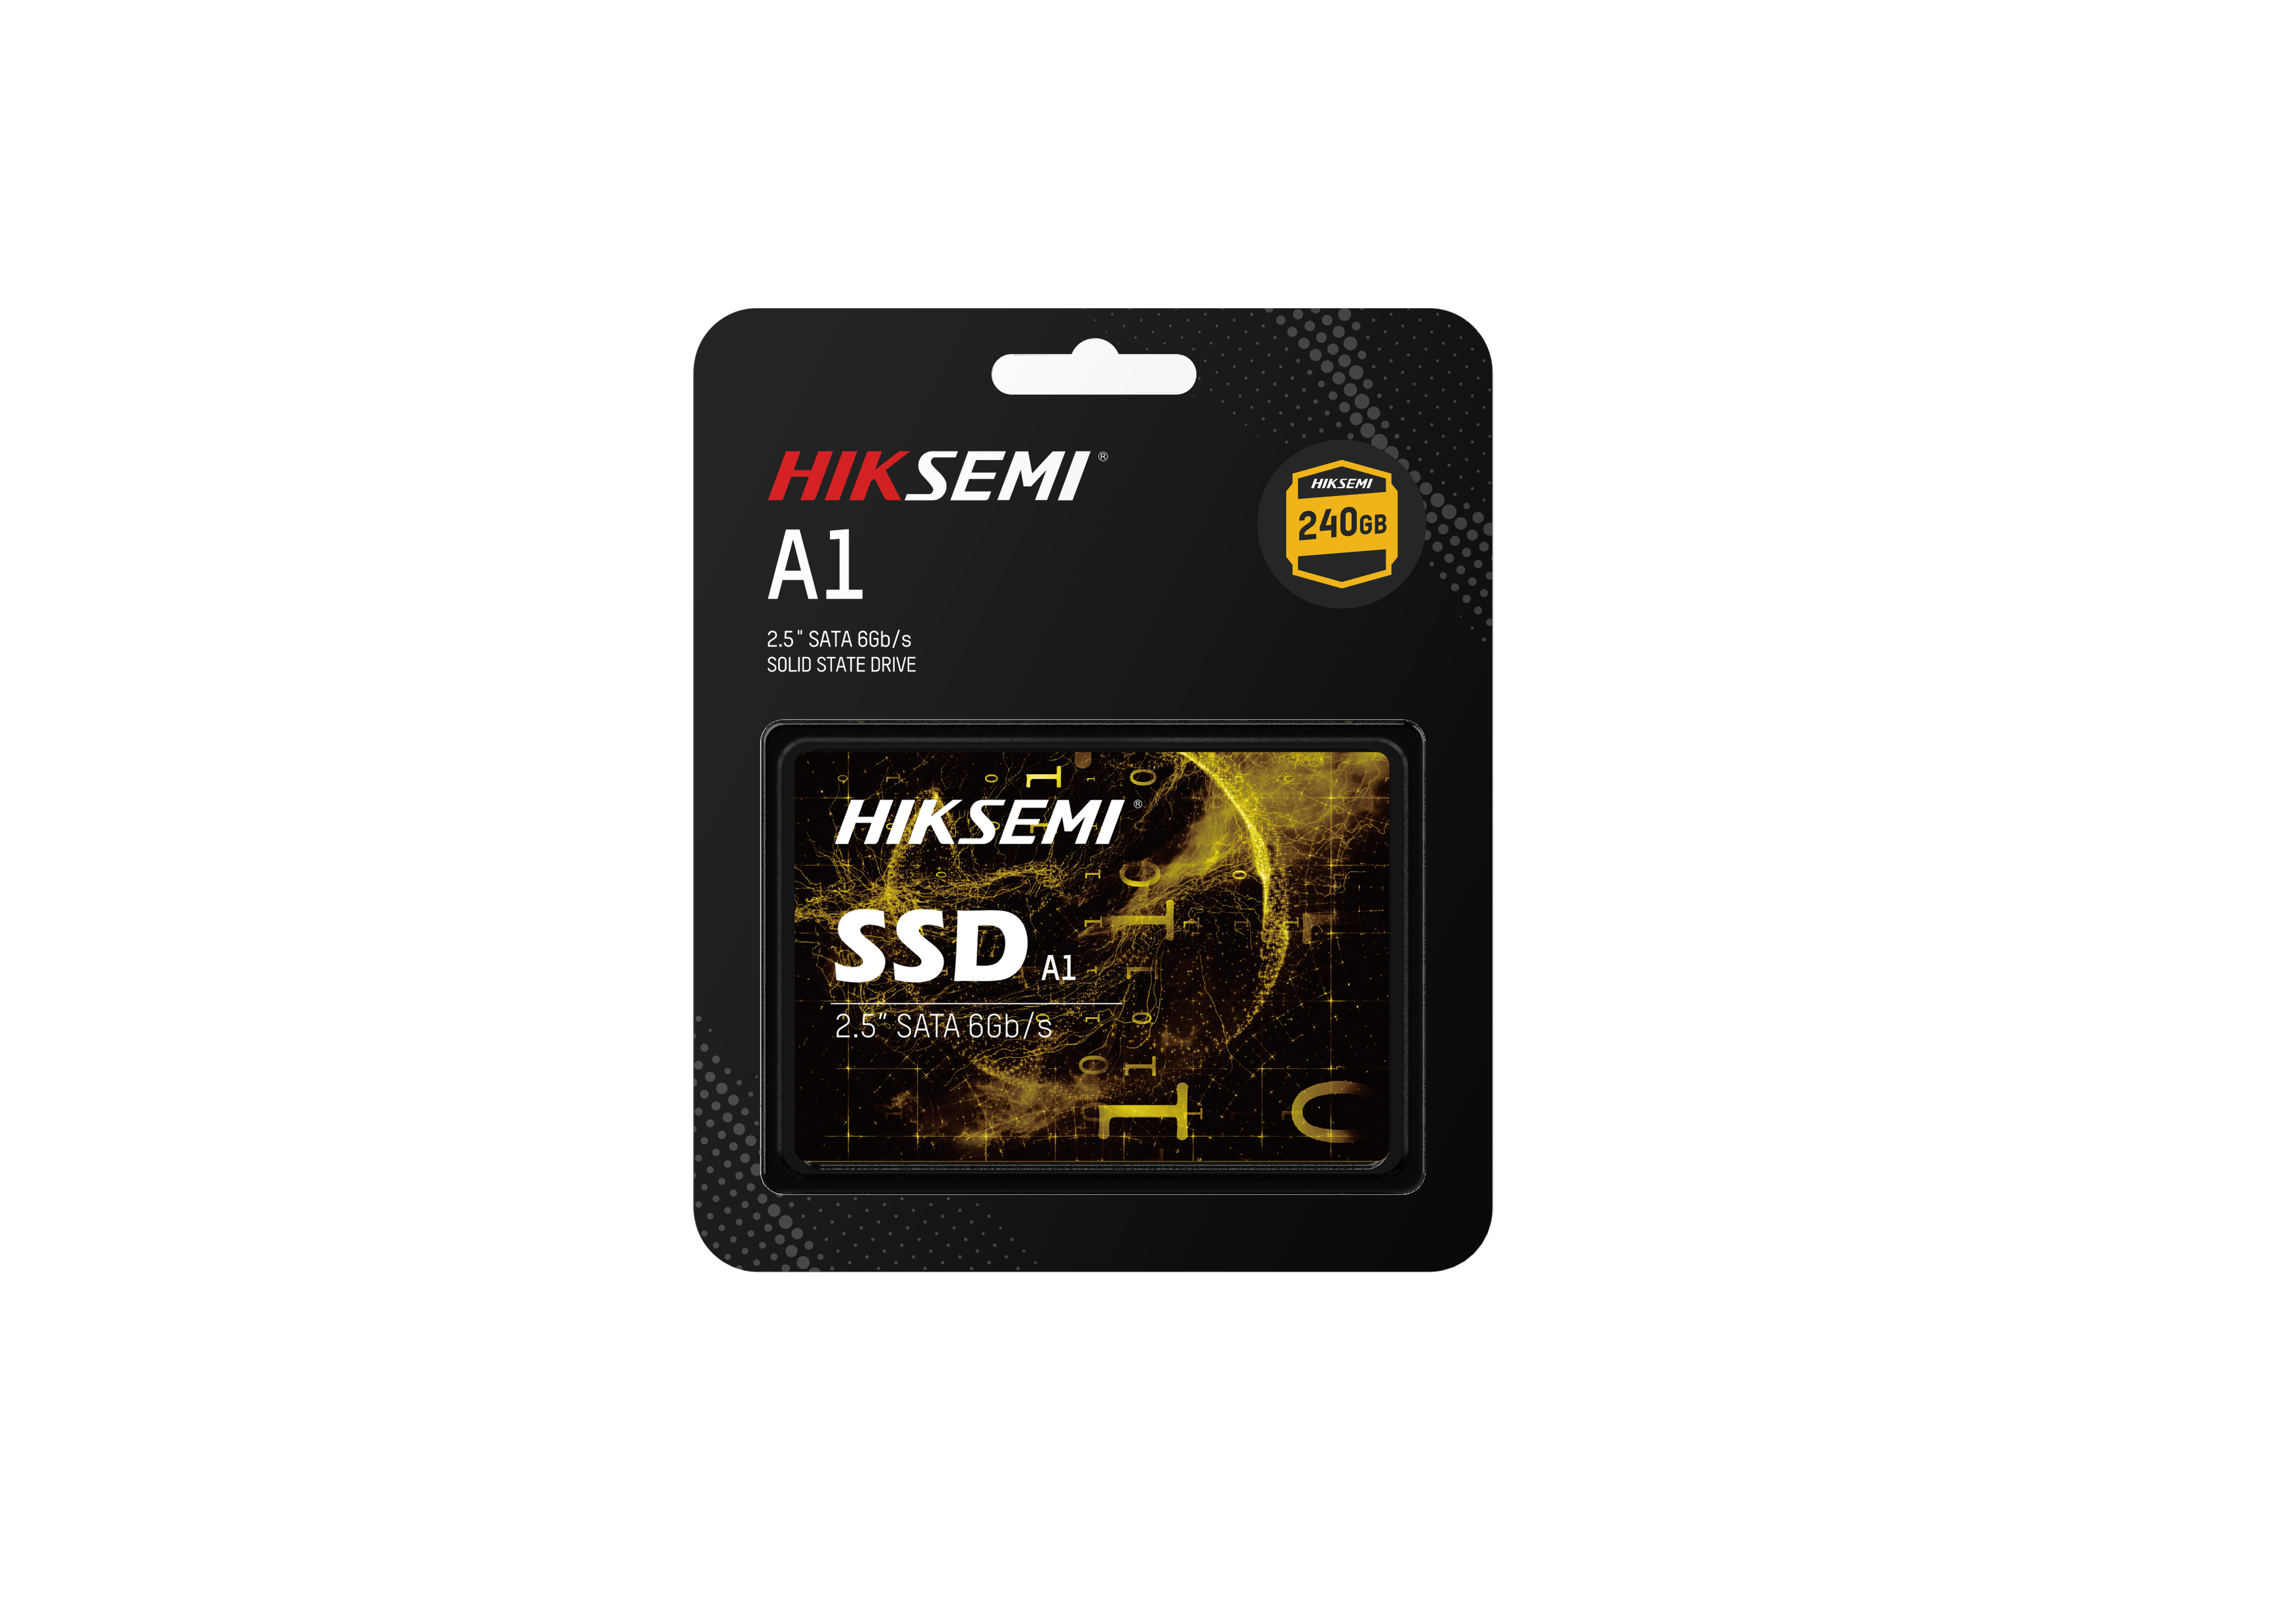 Ổ cứng Hiksemi SSD 240GB